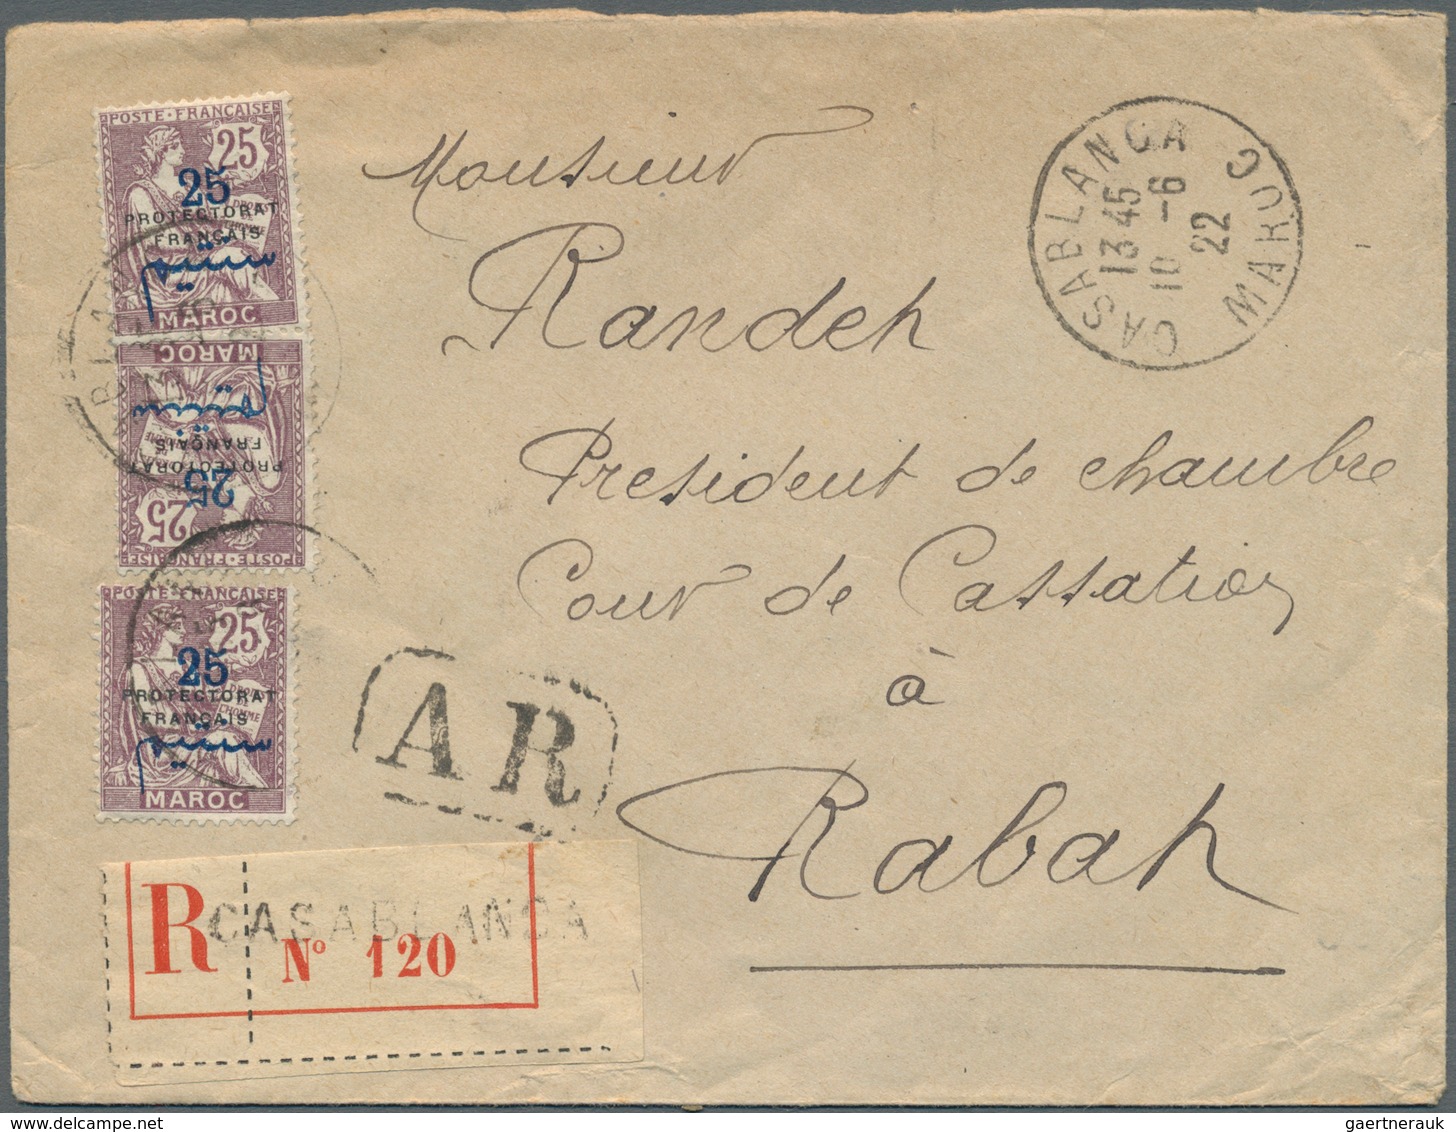 Französische Kolonien: 1871/1944: 87 better covers and postal stationeries including picture postcar